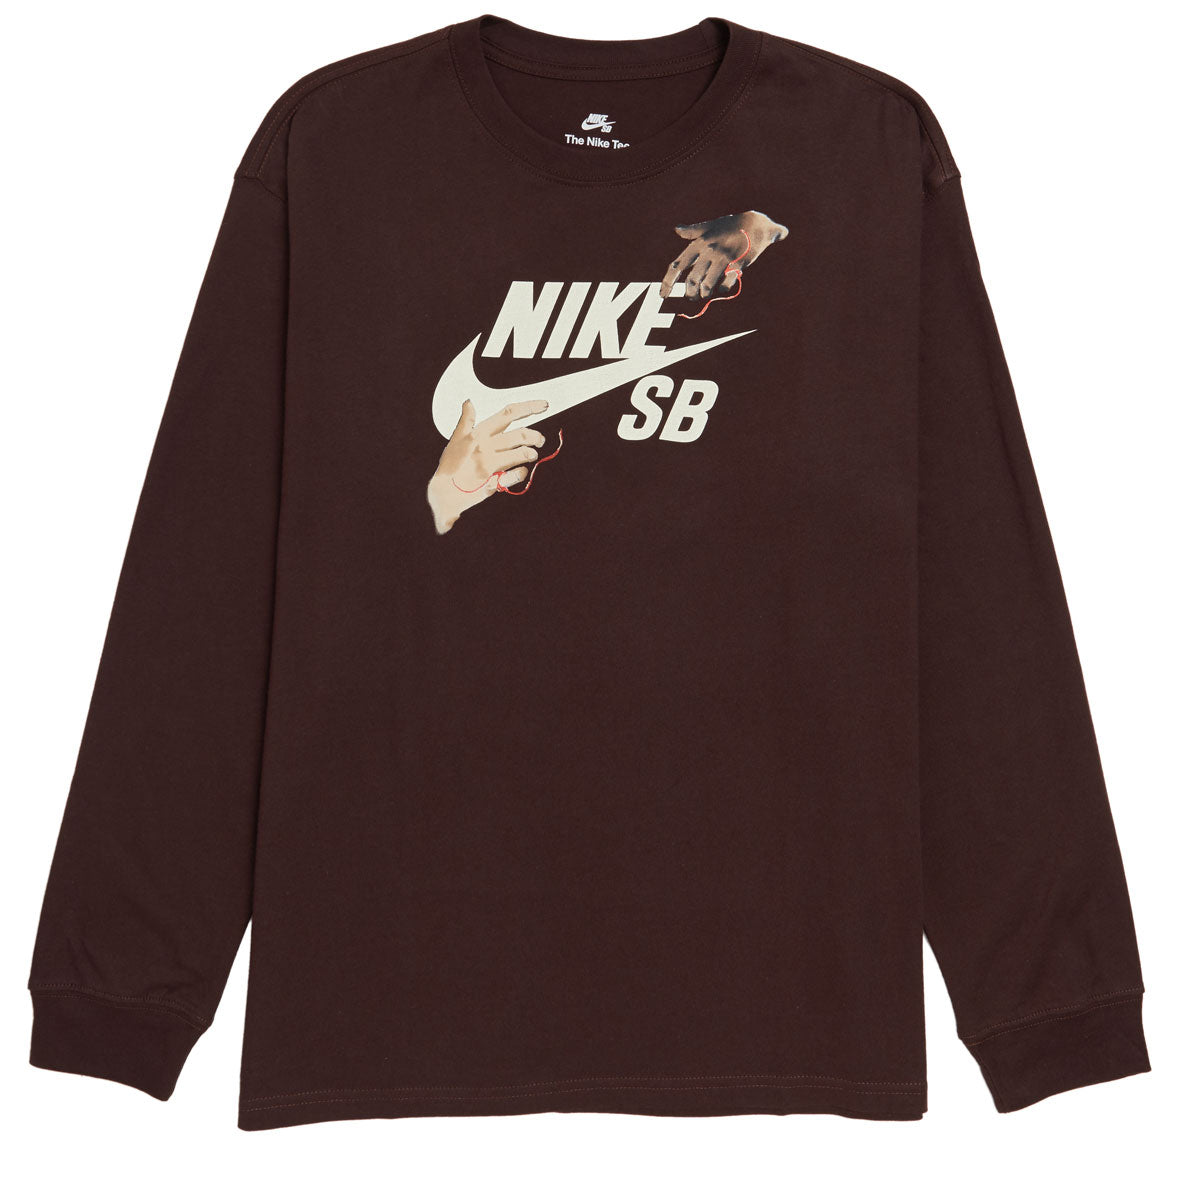 Nike SB The Reach Long Sleeve T-Shirt - Earth image 1